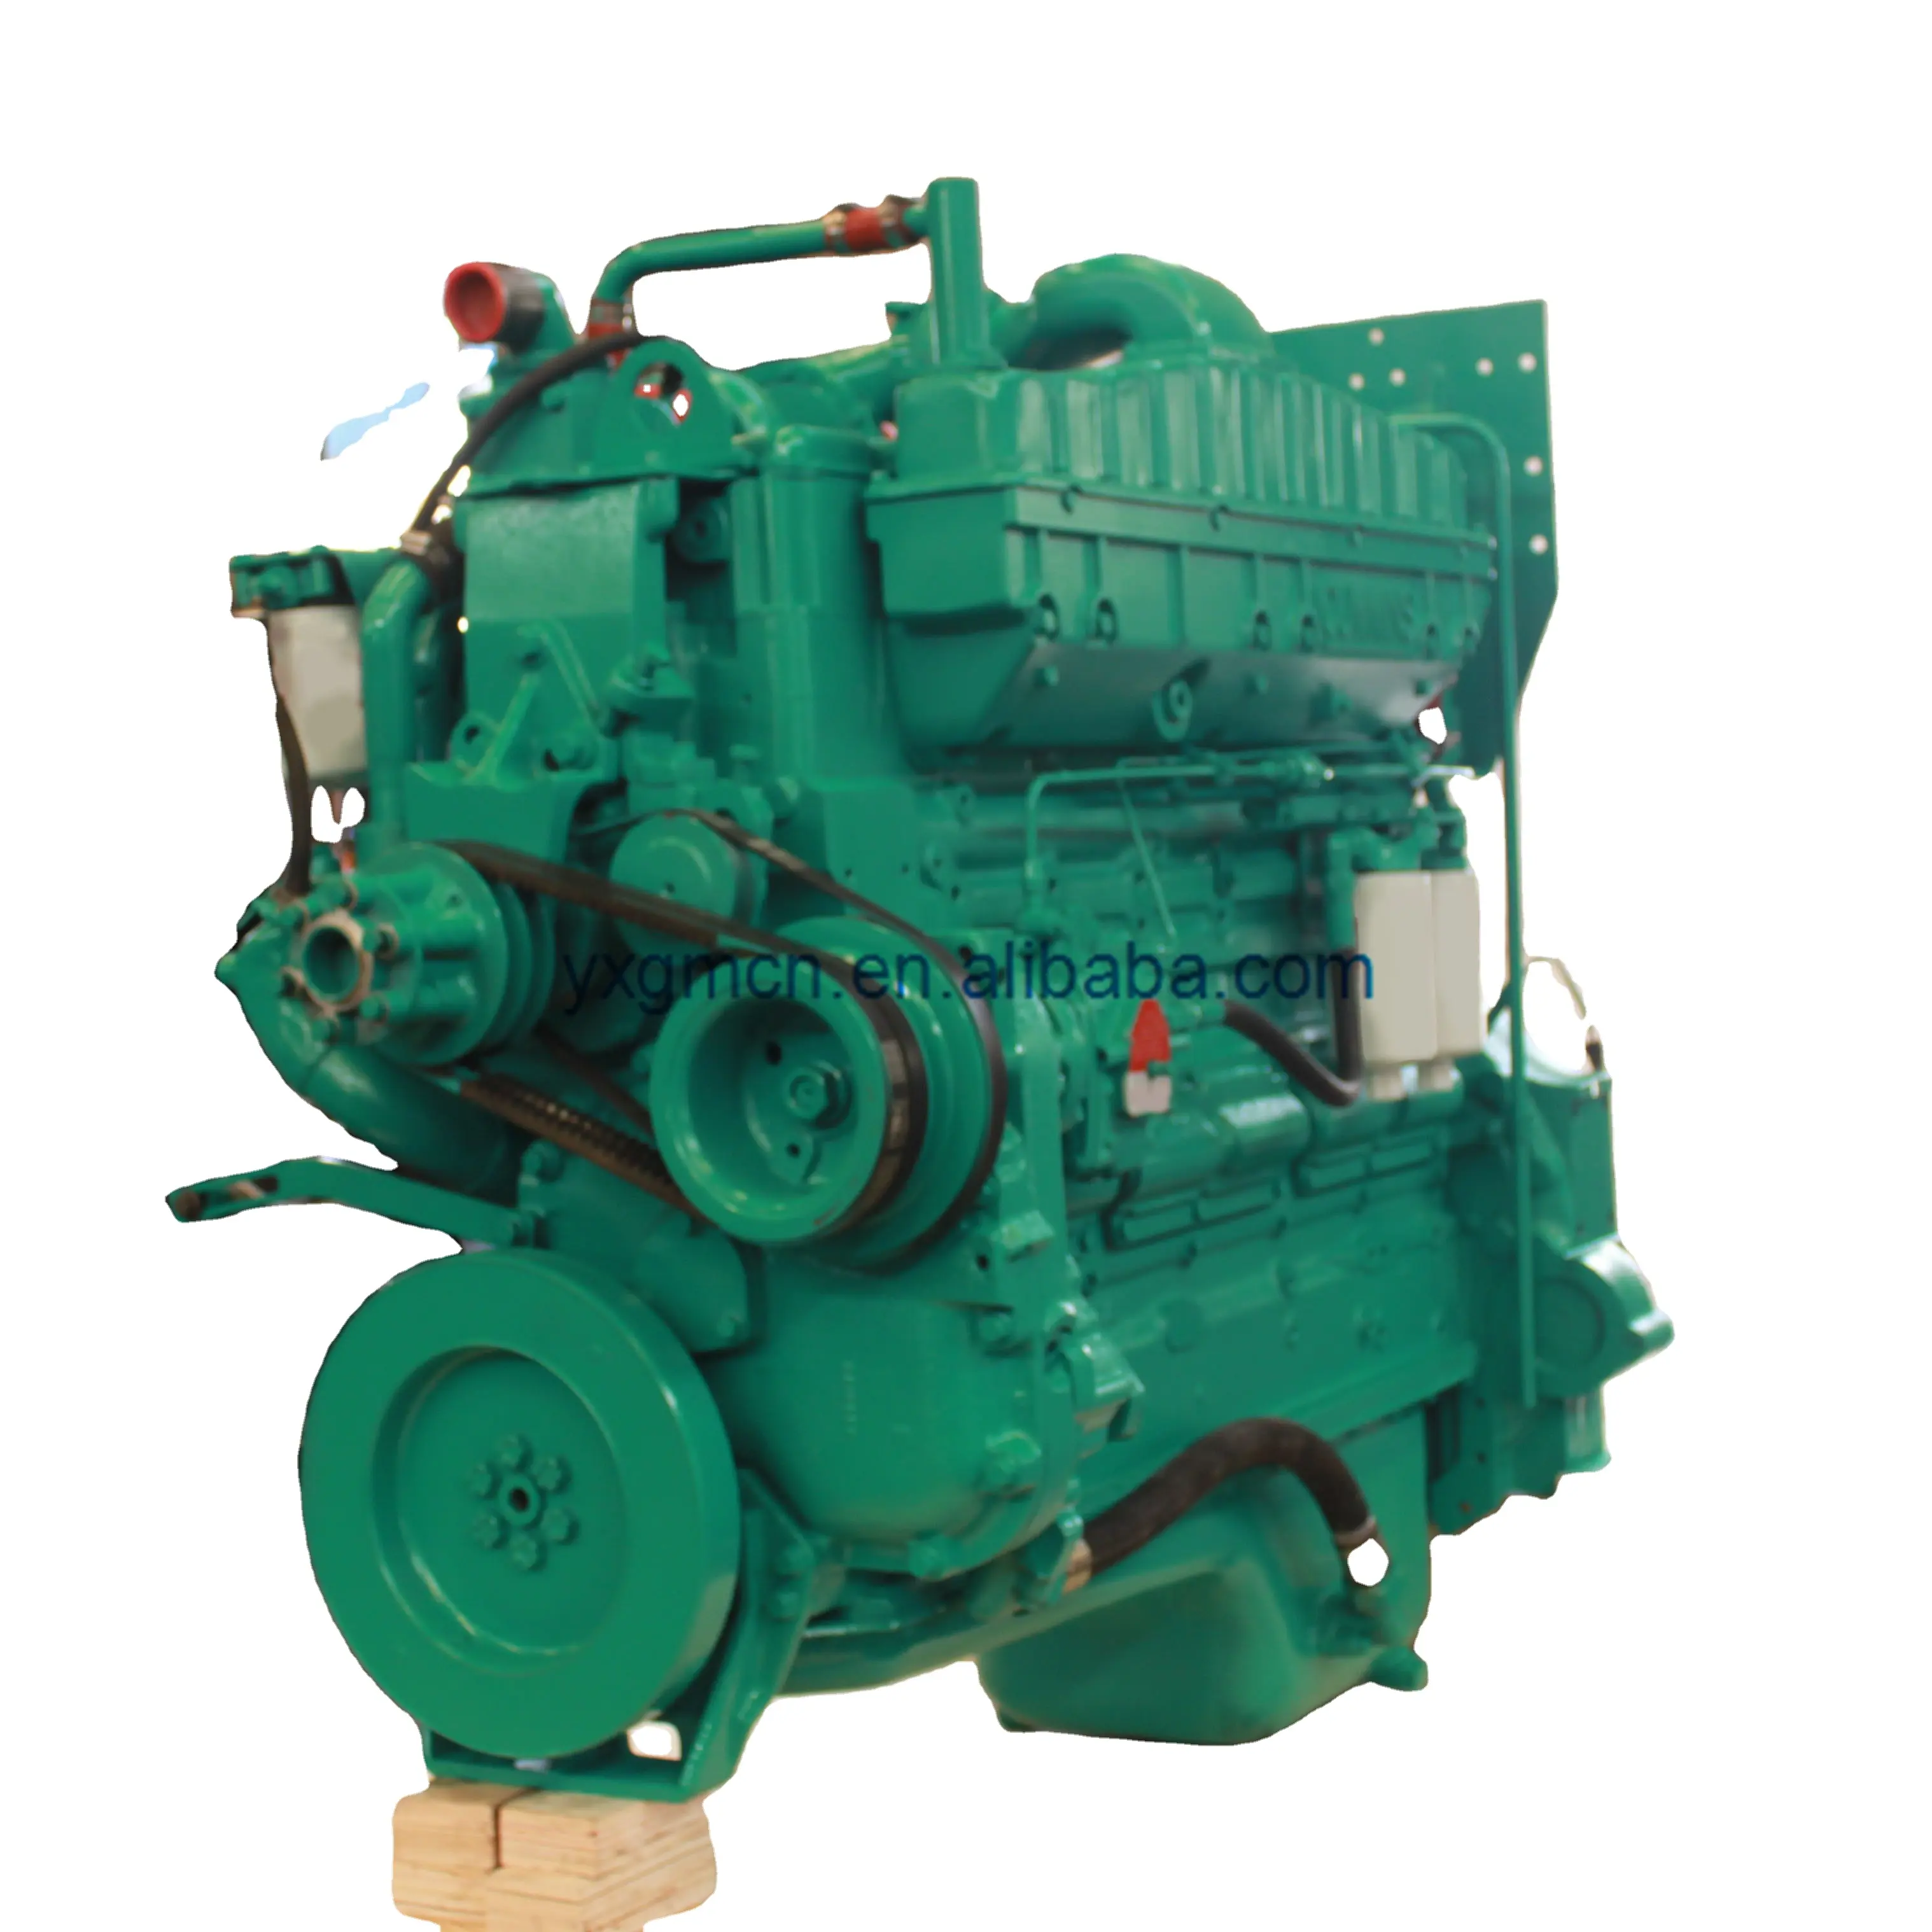 NTA855 G1 G2 In-line 6-cylinder 4-stroke marine engine diesel used